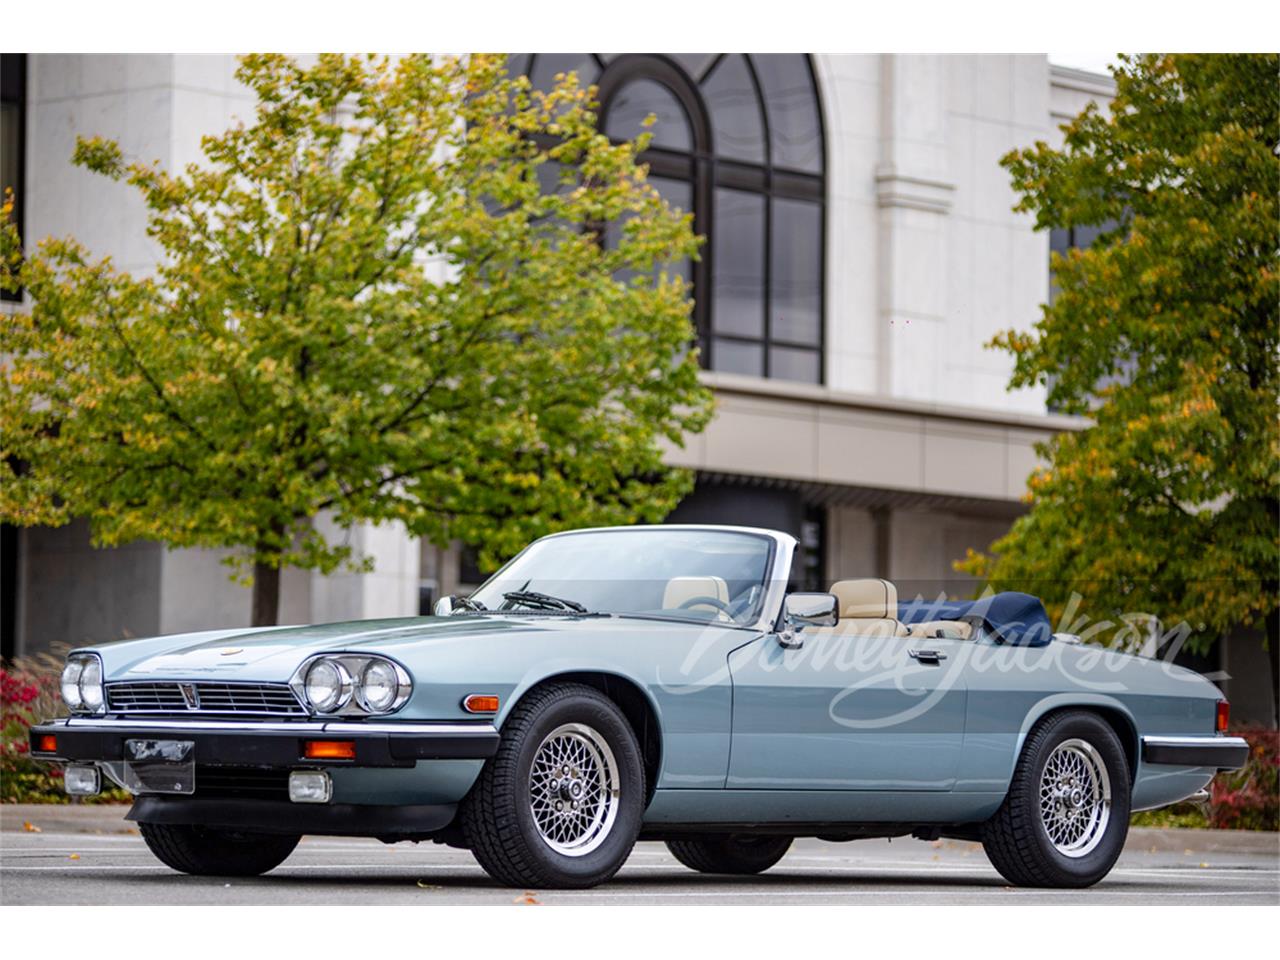 For Sale at Auction: 1990 Jaguar XJS in Scottsdale, Arizona for sale in Scottsdale, AZ